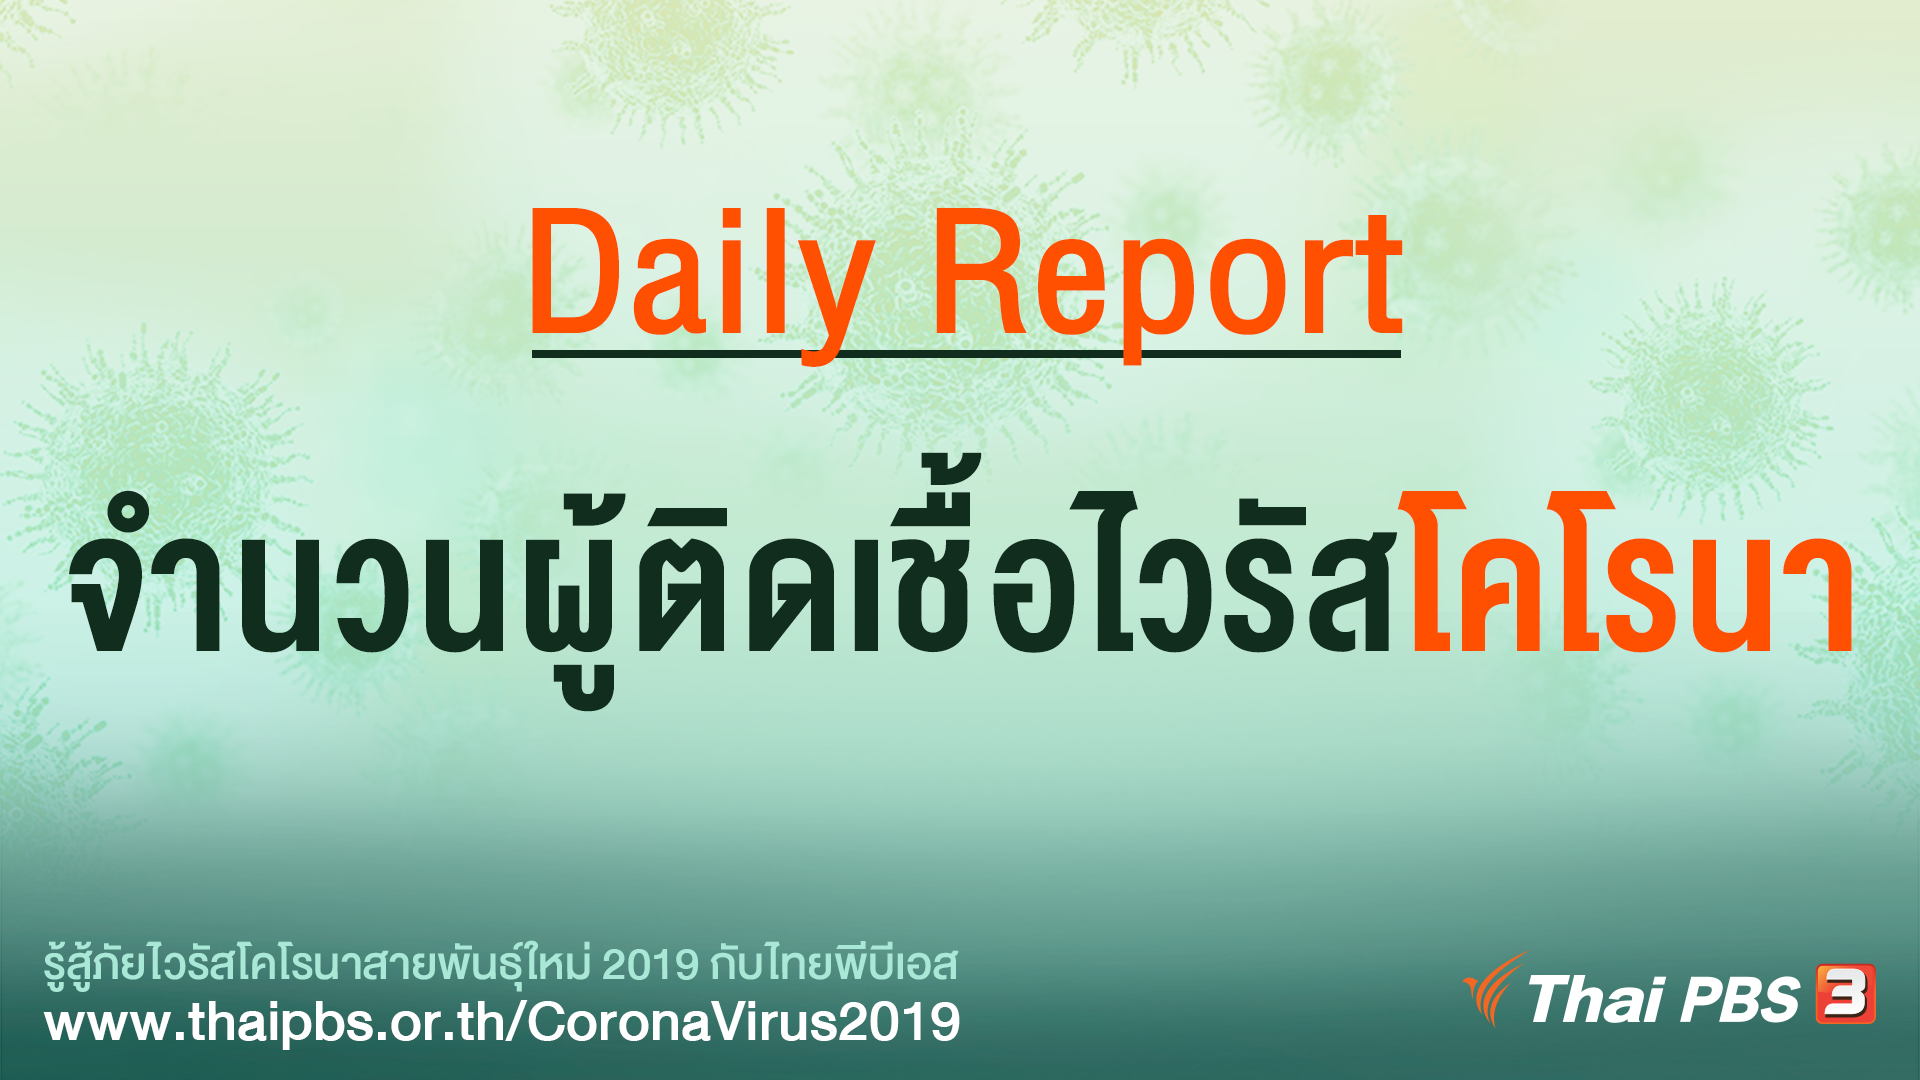 Daily Report : จำนวนผู้ติดเชื้อไวรัสโคโรนา